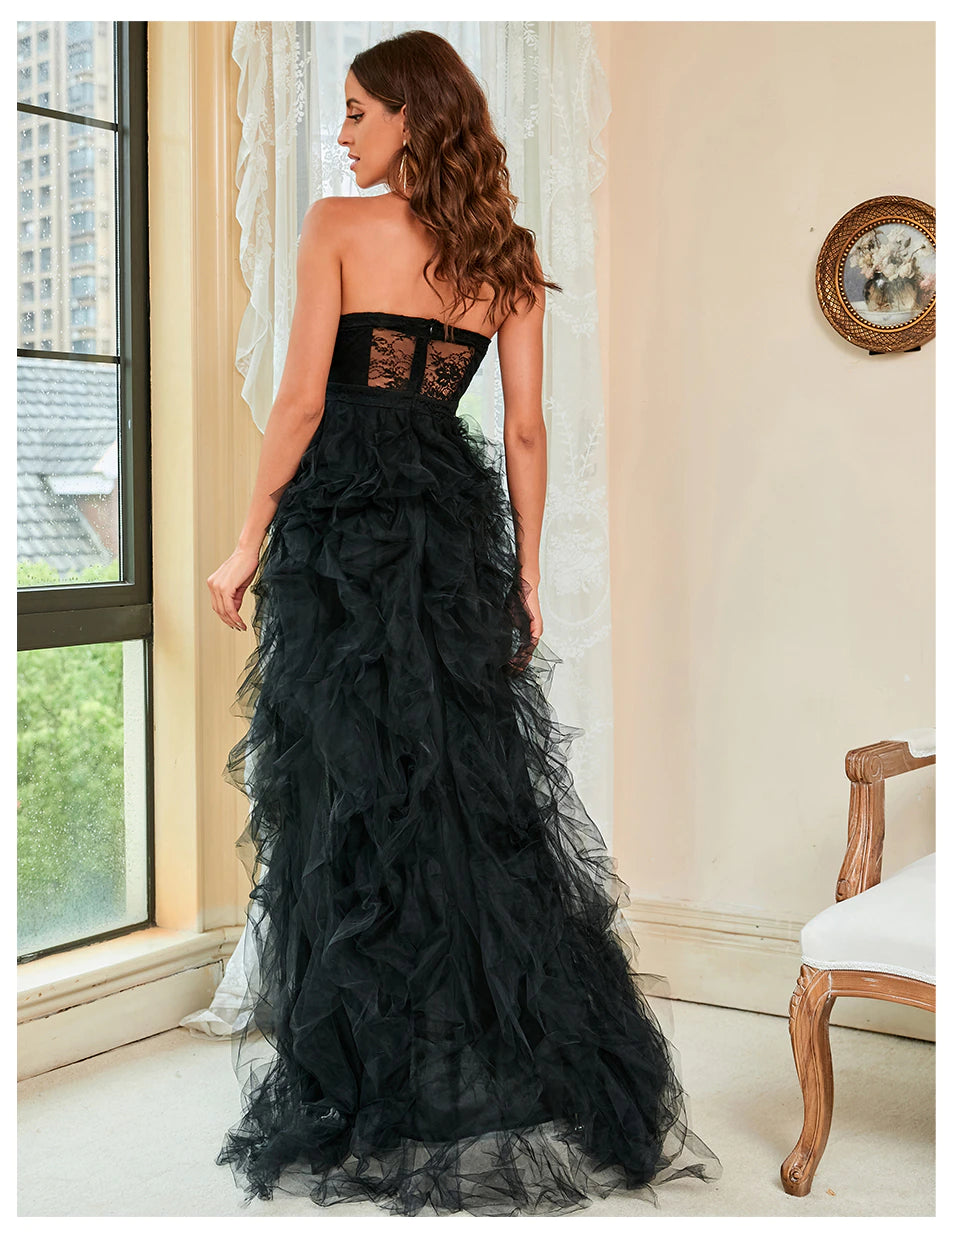 Elegant Evening Strapless Sleeveless A-shaped Floor-Length Lace Dress